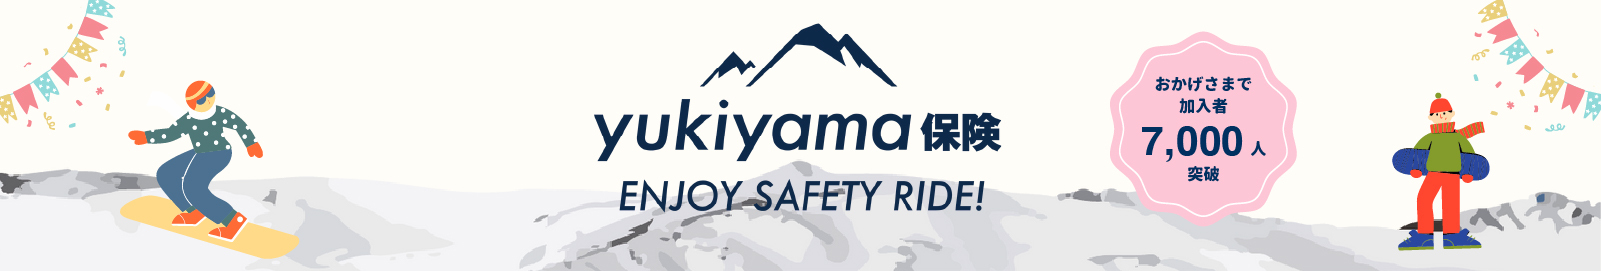 yukiyama保険